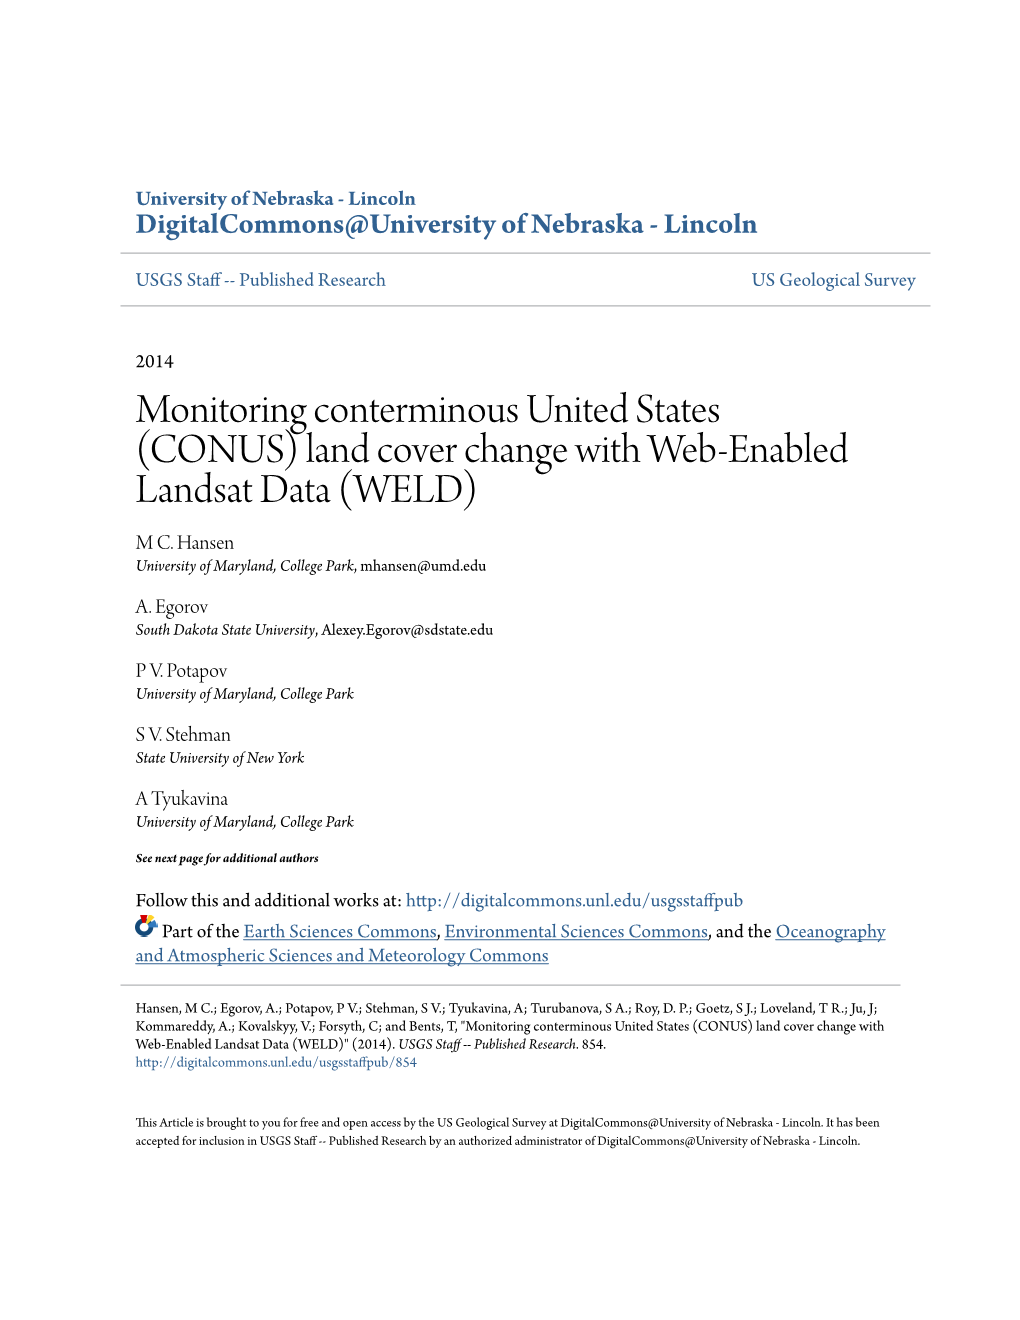 (CONUS) Land Cover Change with Web-Enabled Landsat Data (WELD) M C